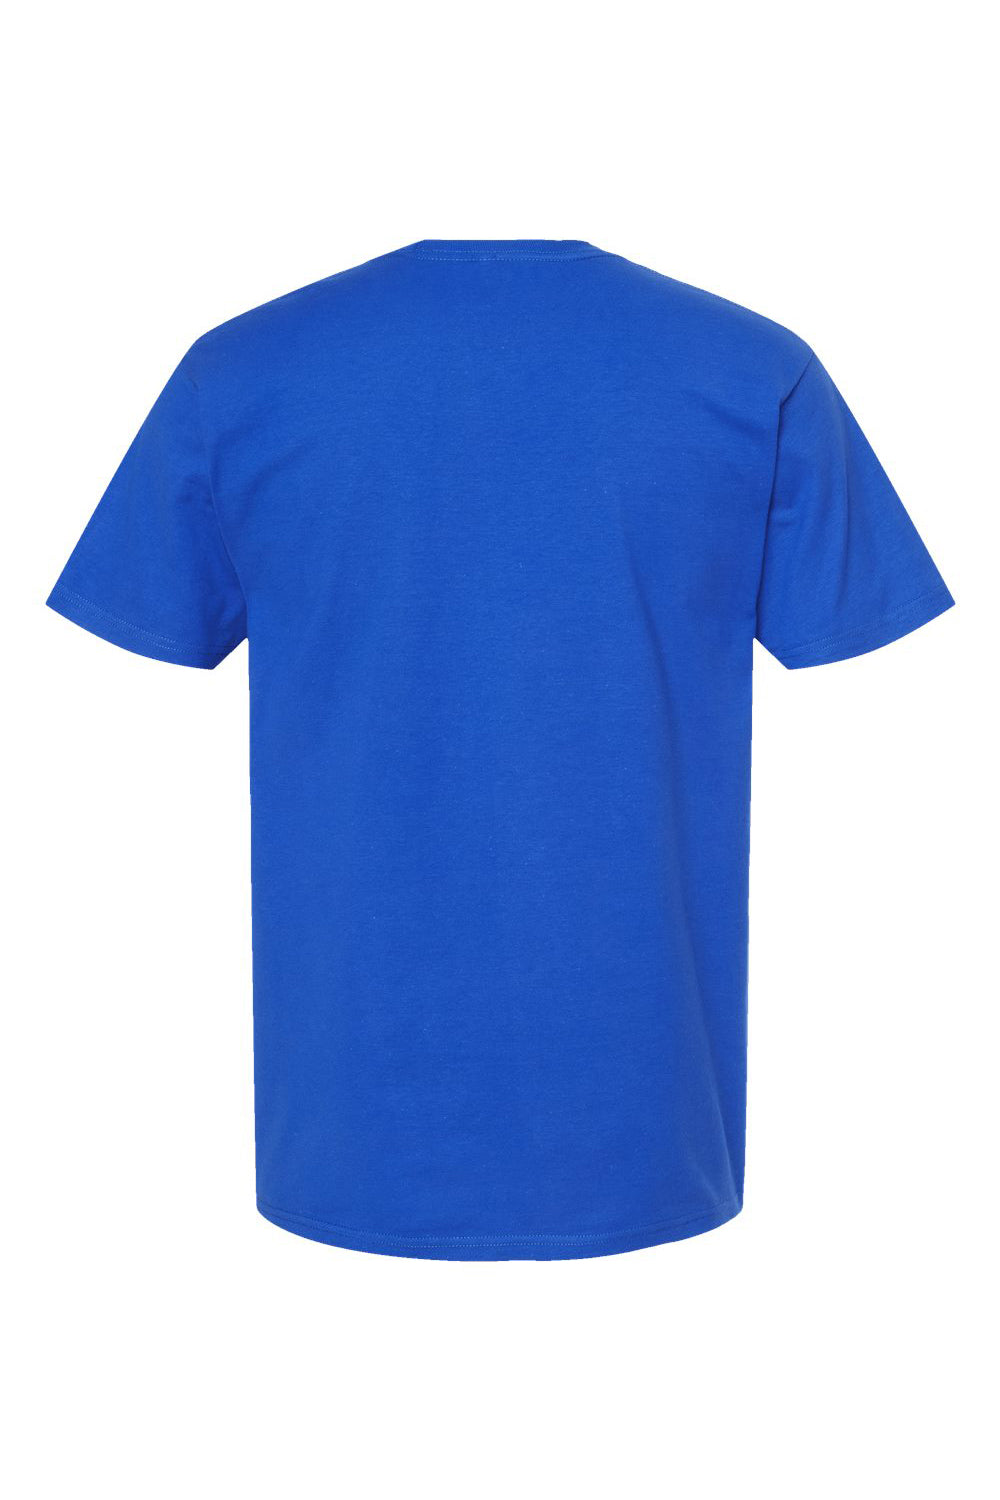 Tultex 290 Mens Jersey Short Sleeve Crewneck T-Shirt Royal Blue Flat Back